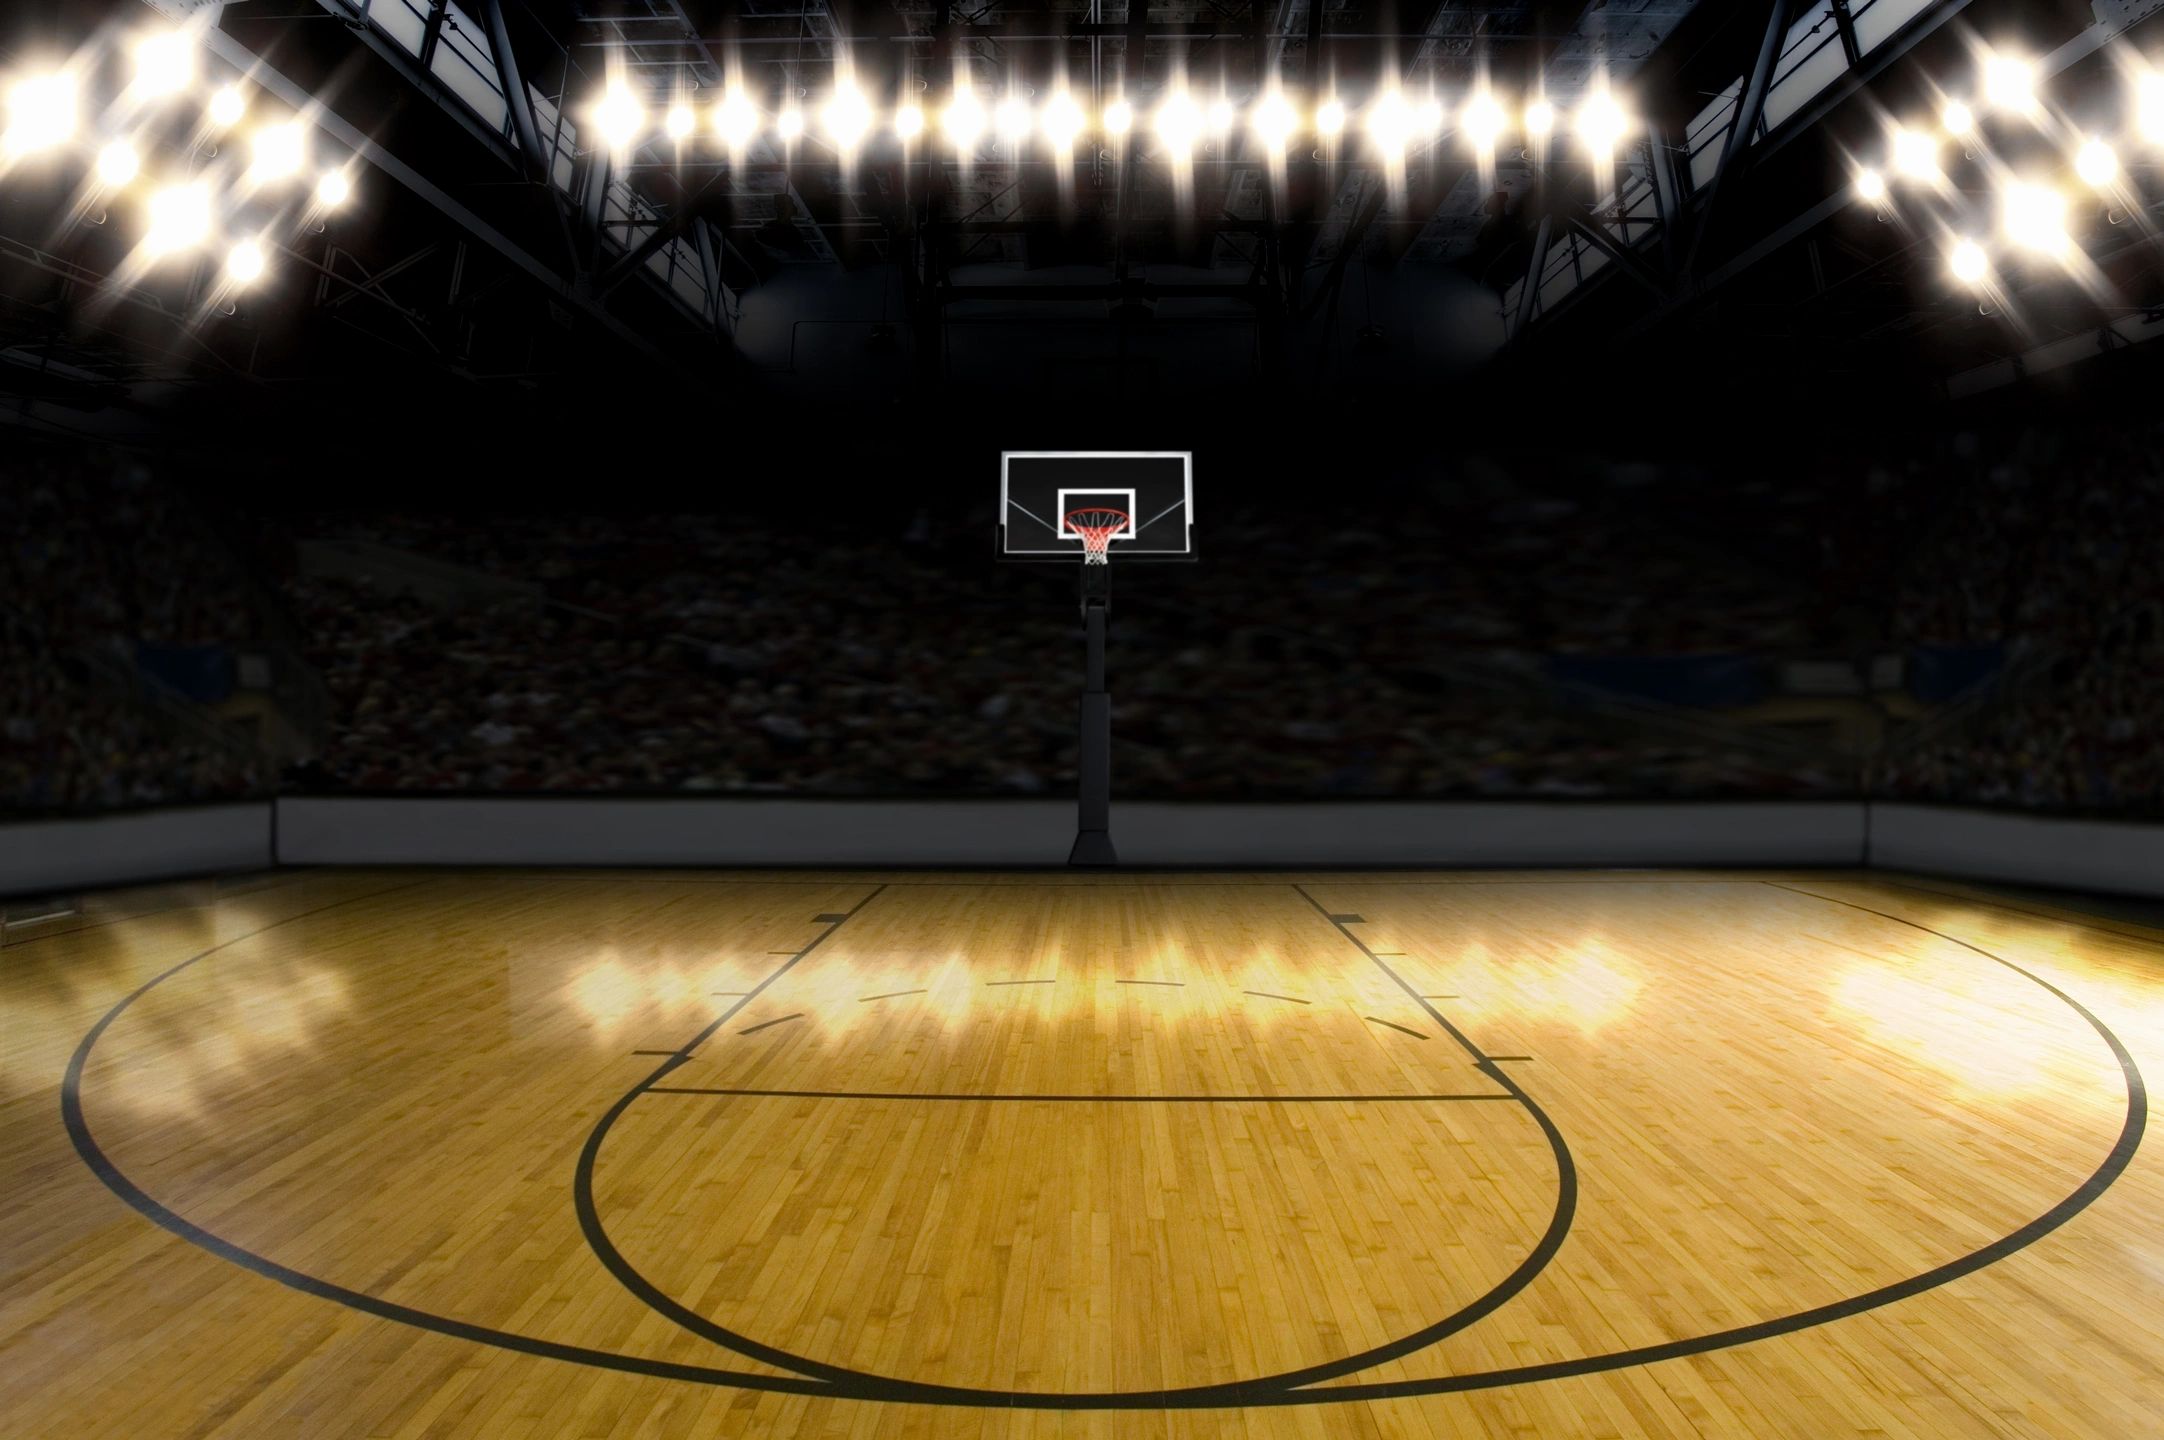 An empty basketball stadium with lights on